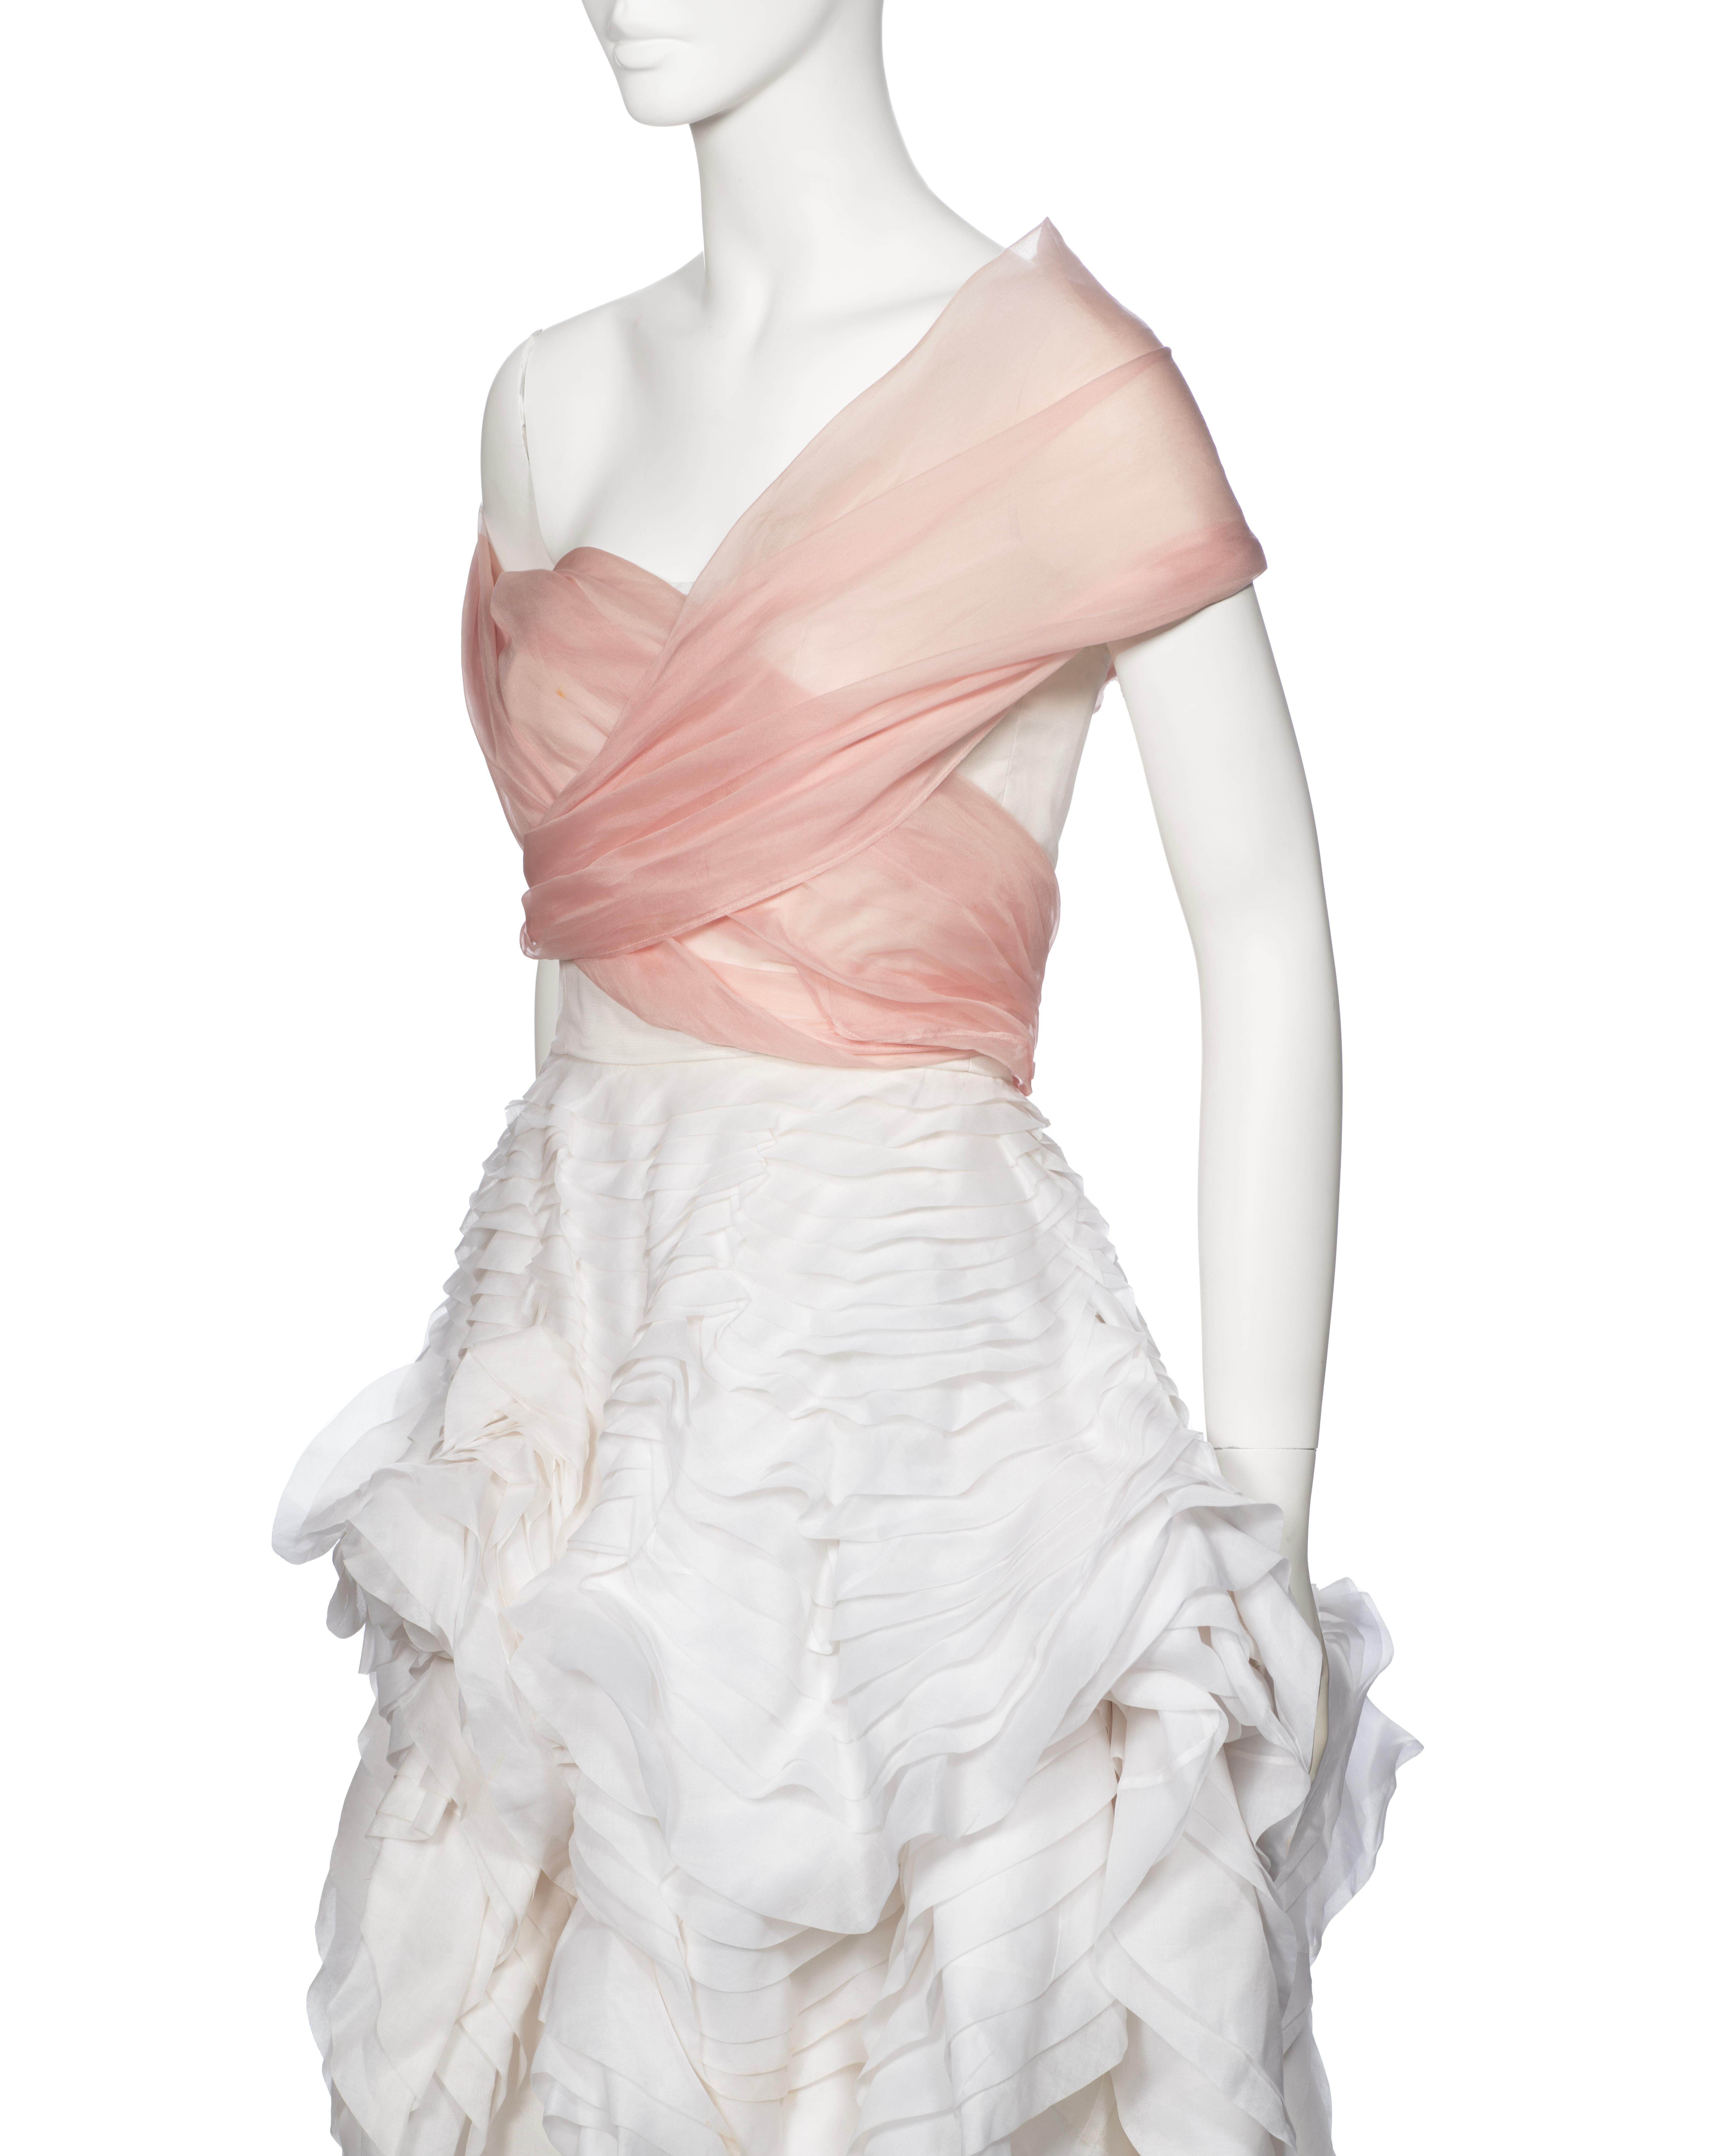 Women's John Galliano Blanche DuBois Clam Dress, ss 1988 For Sale